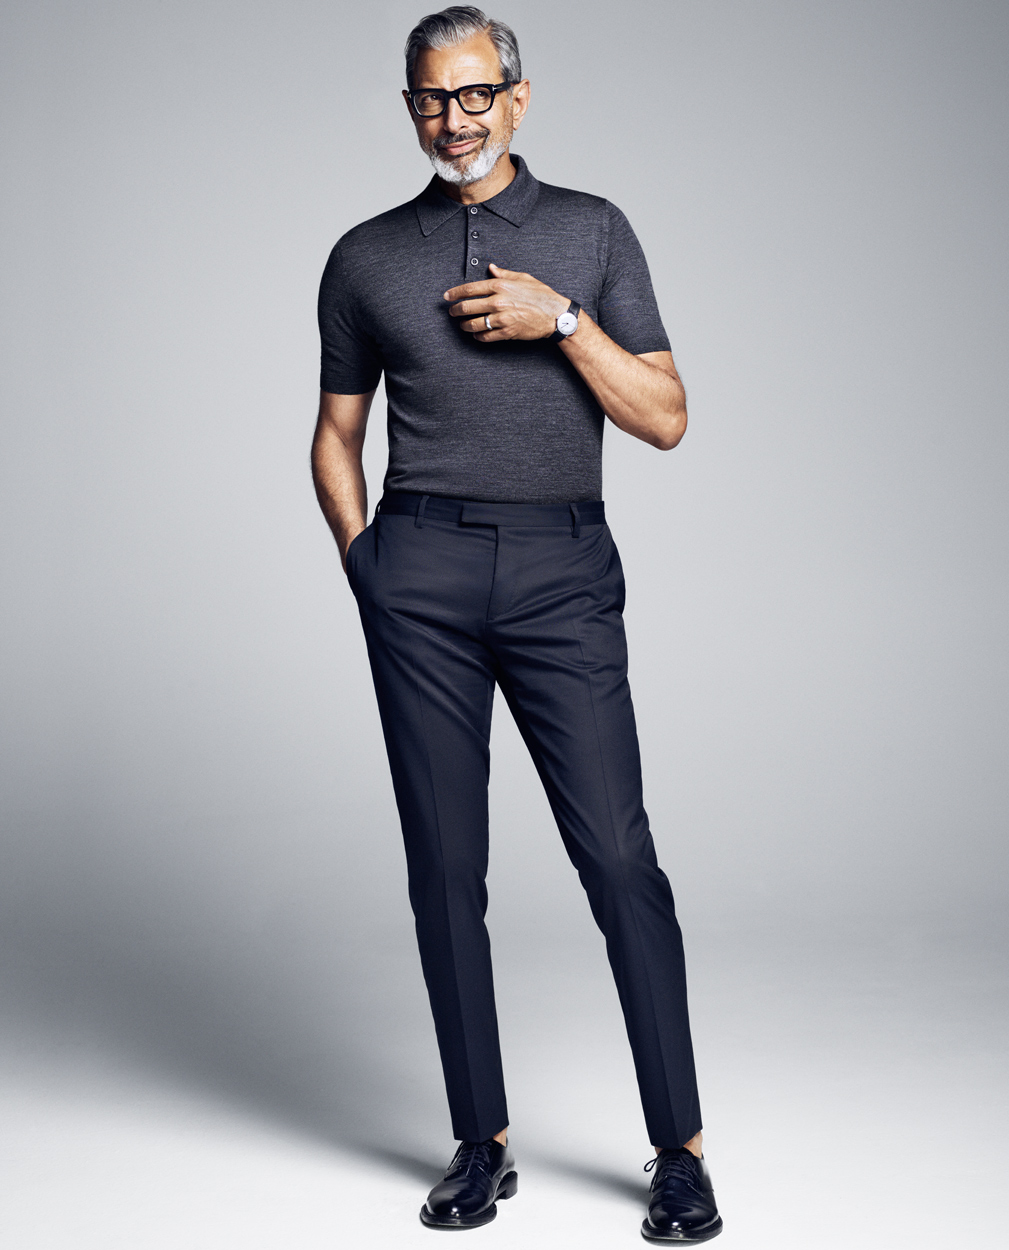 Celebrity Photographer Michael Schwartz: Jeff Goldblum for Icon magazine